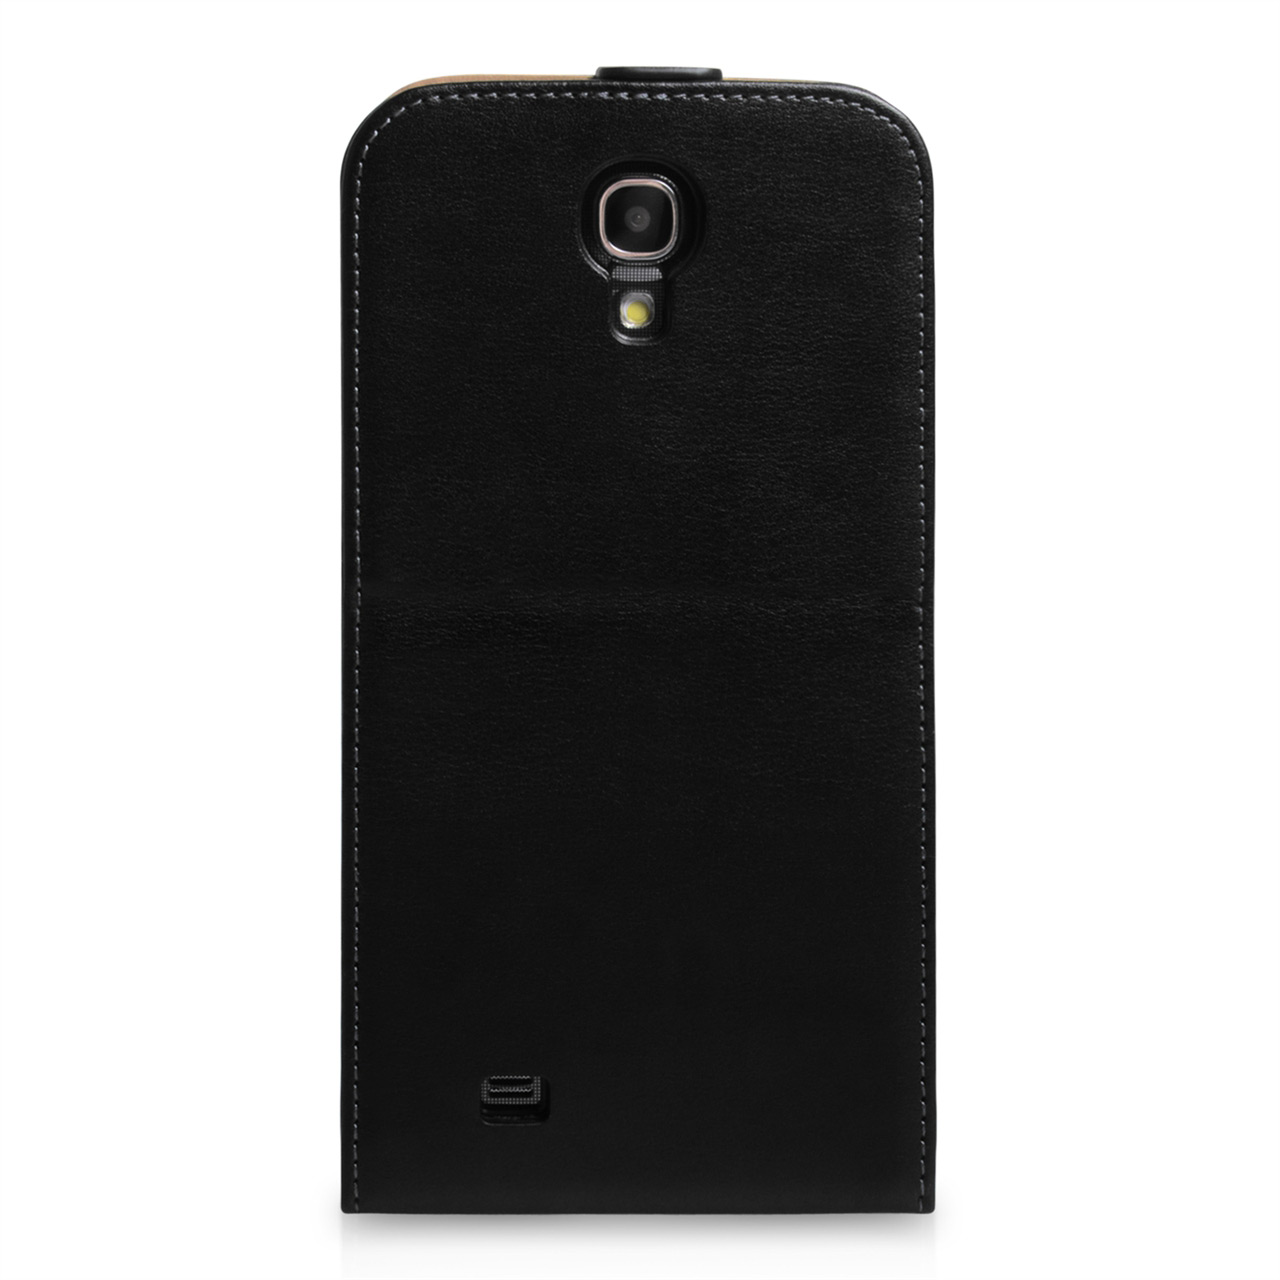 YouSave Samsung Galaxy Mega 6.3 Real Leather Flip Case - Black